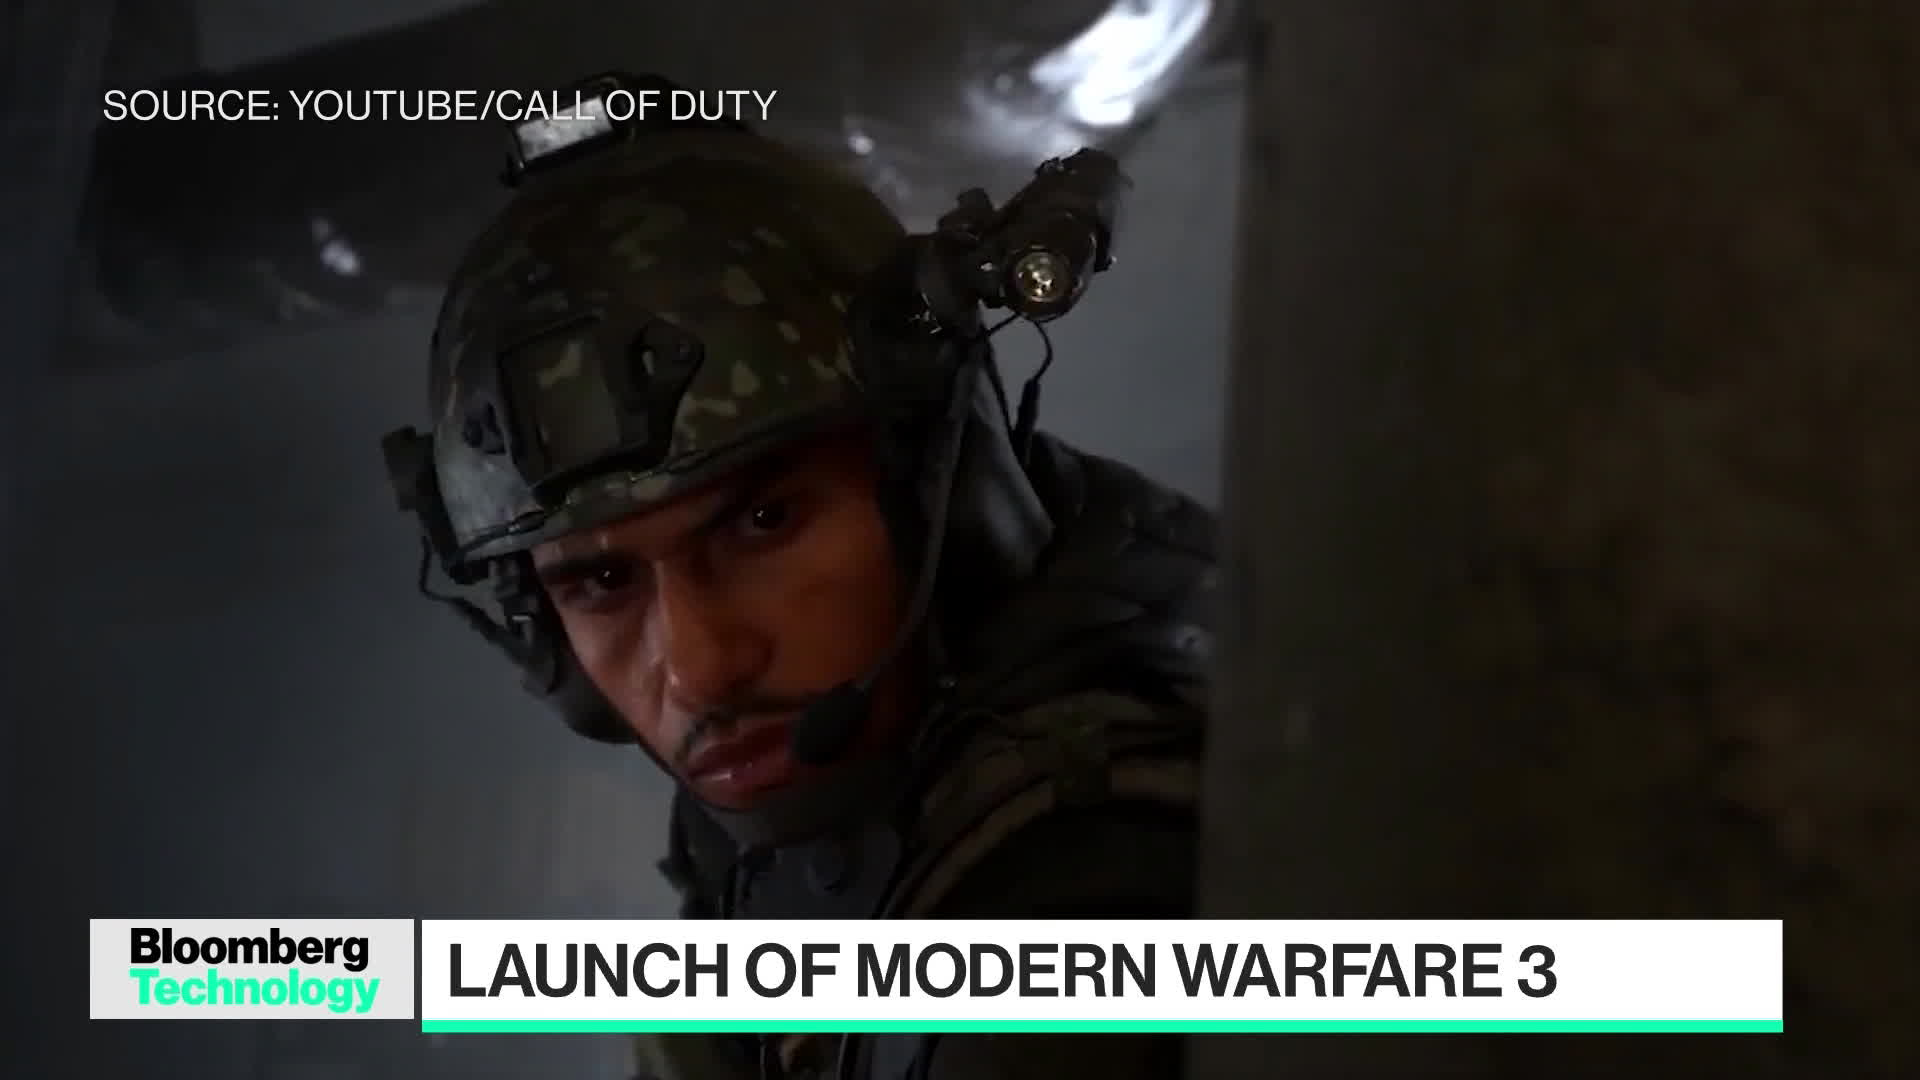 Modern Warfare III Informer on X: 🚨COD 2022 NEWS: According to